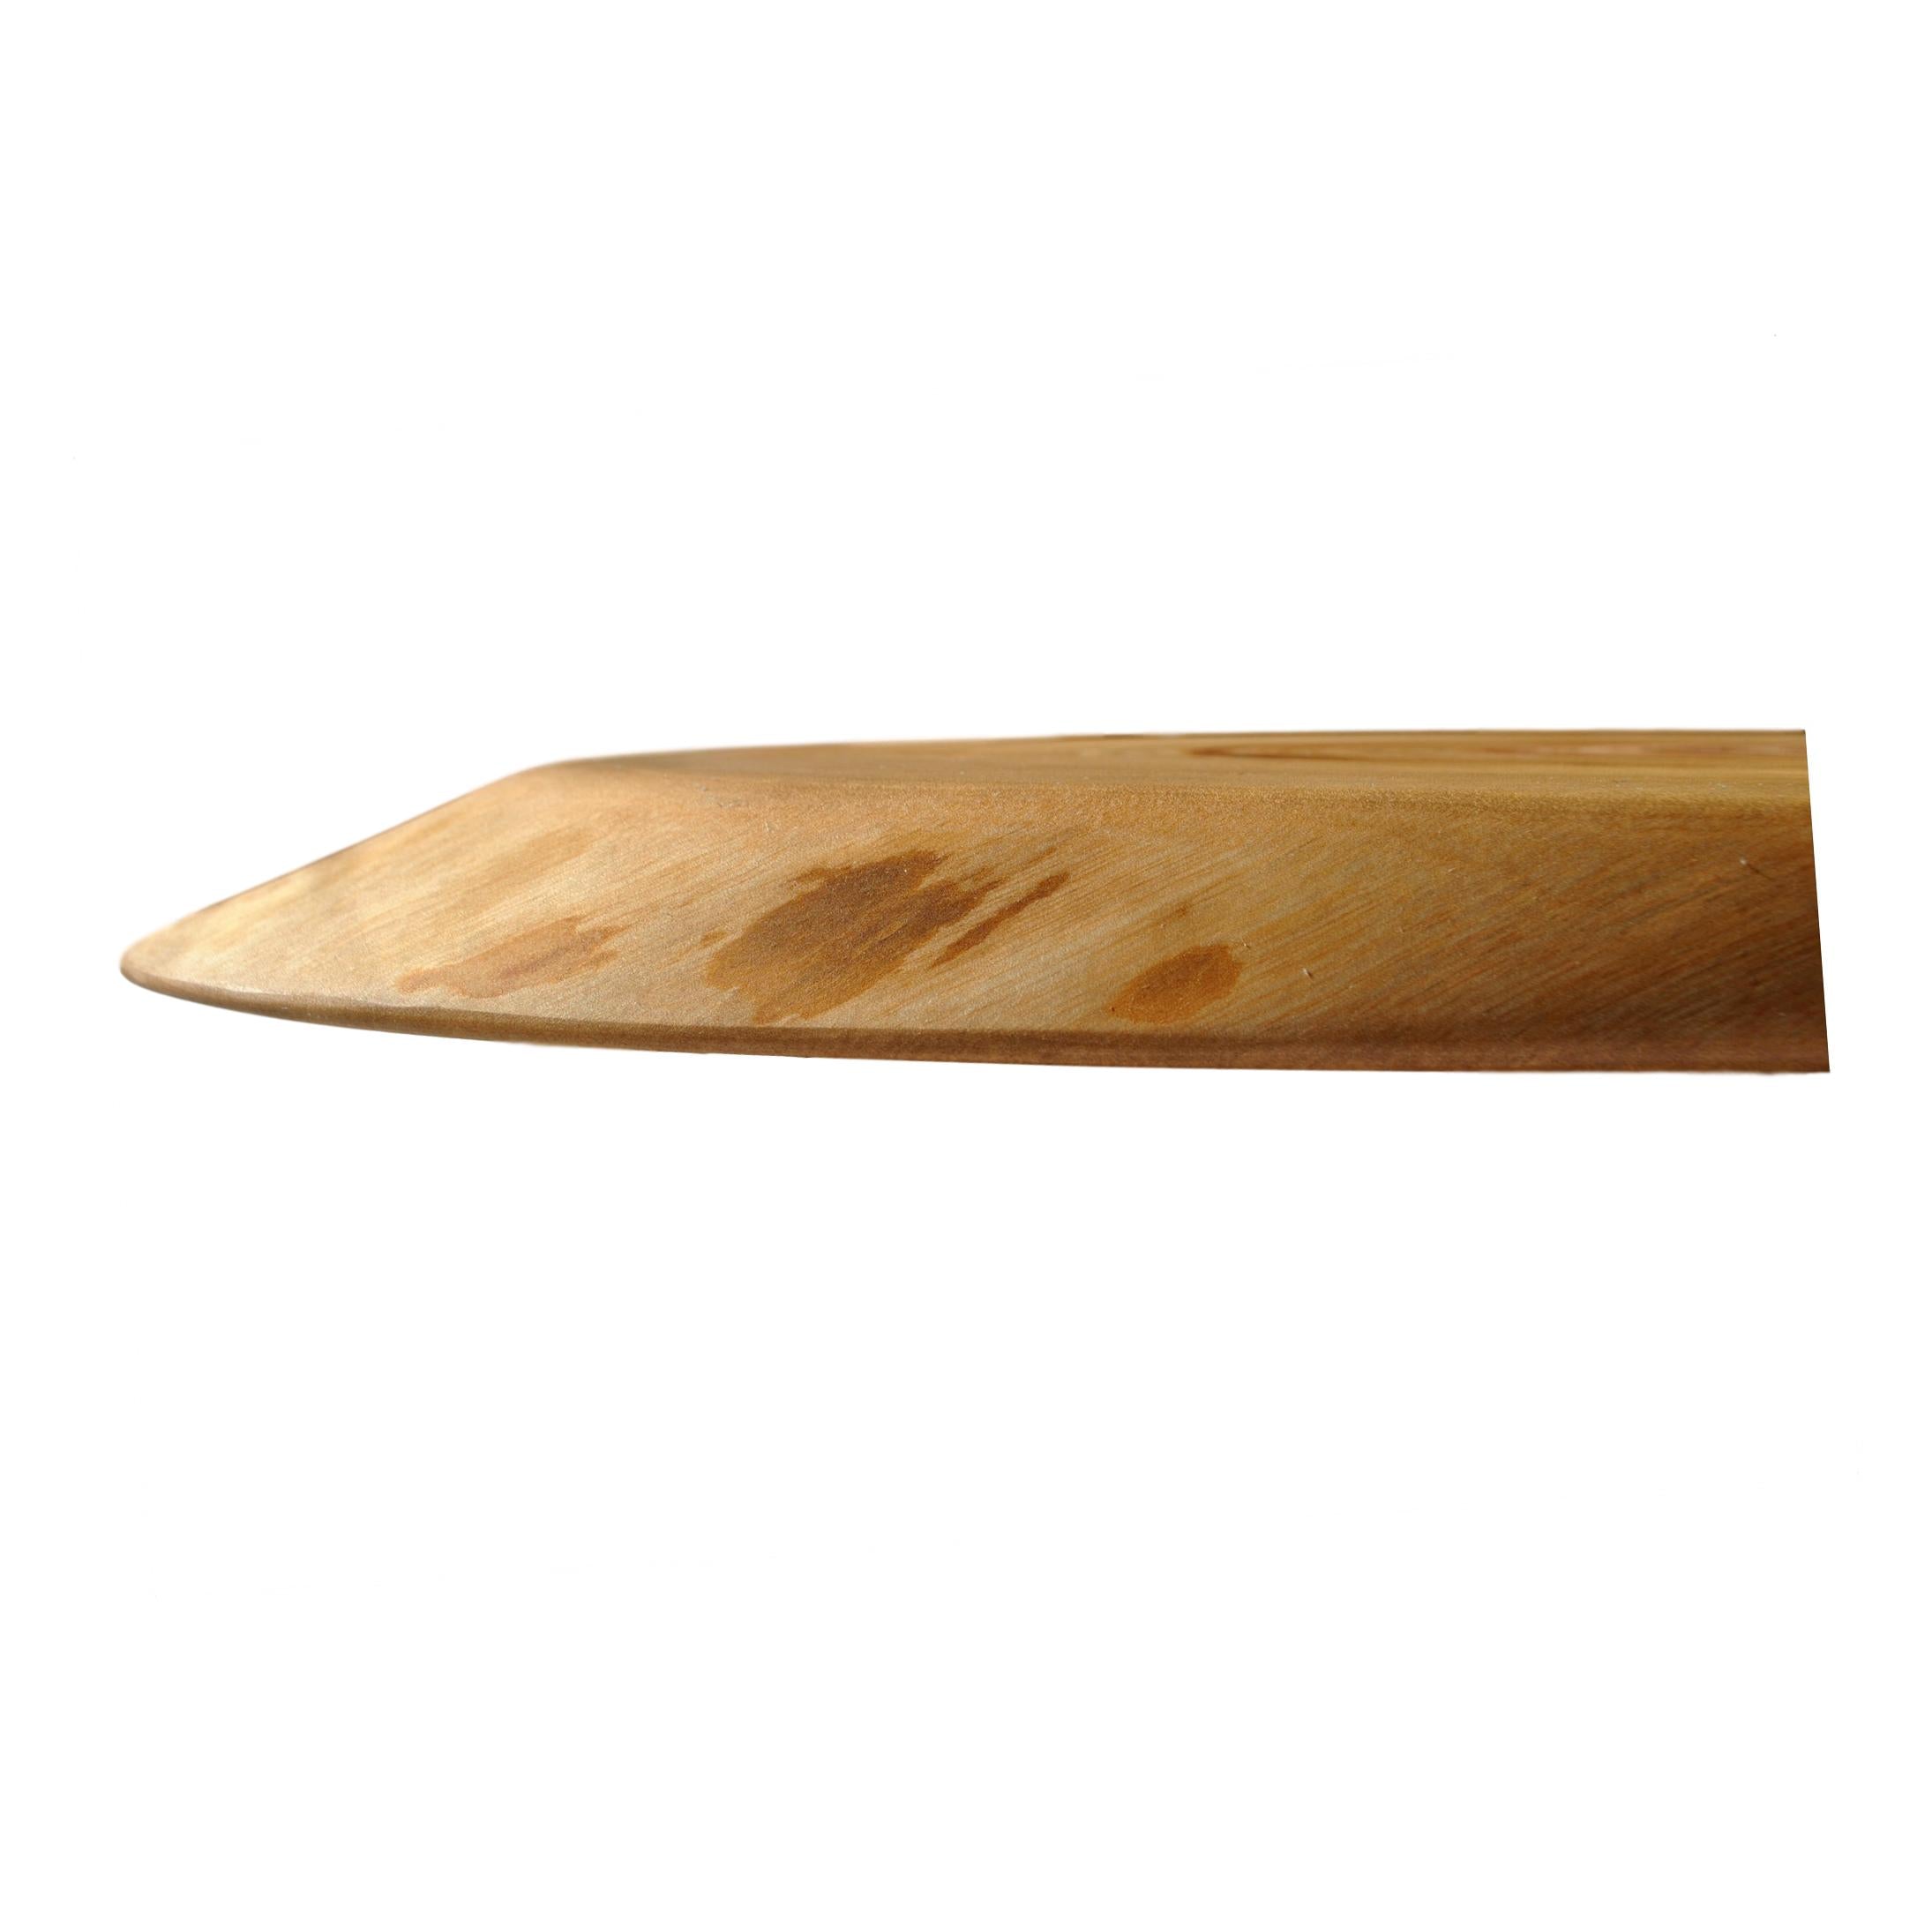 natural live edge chopping block or cutting board